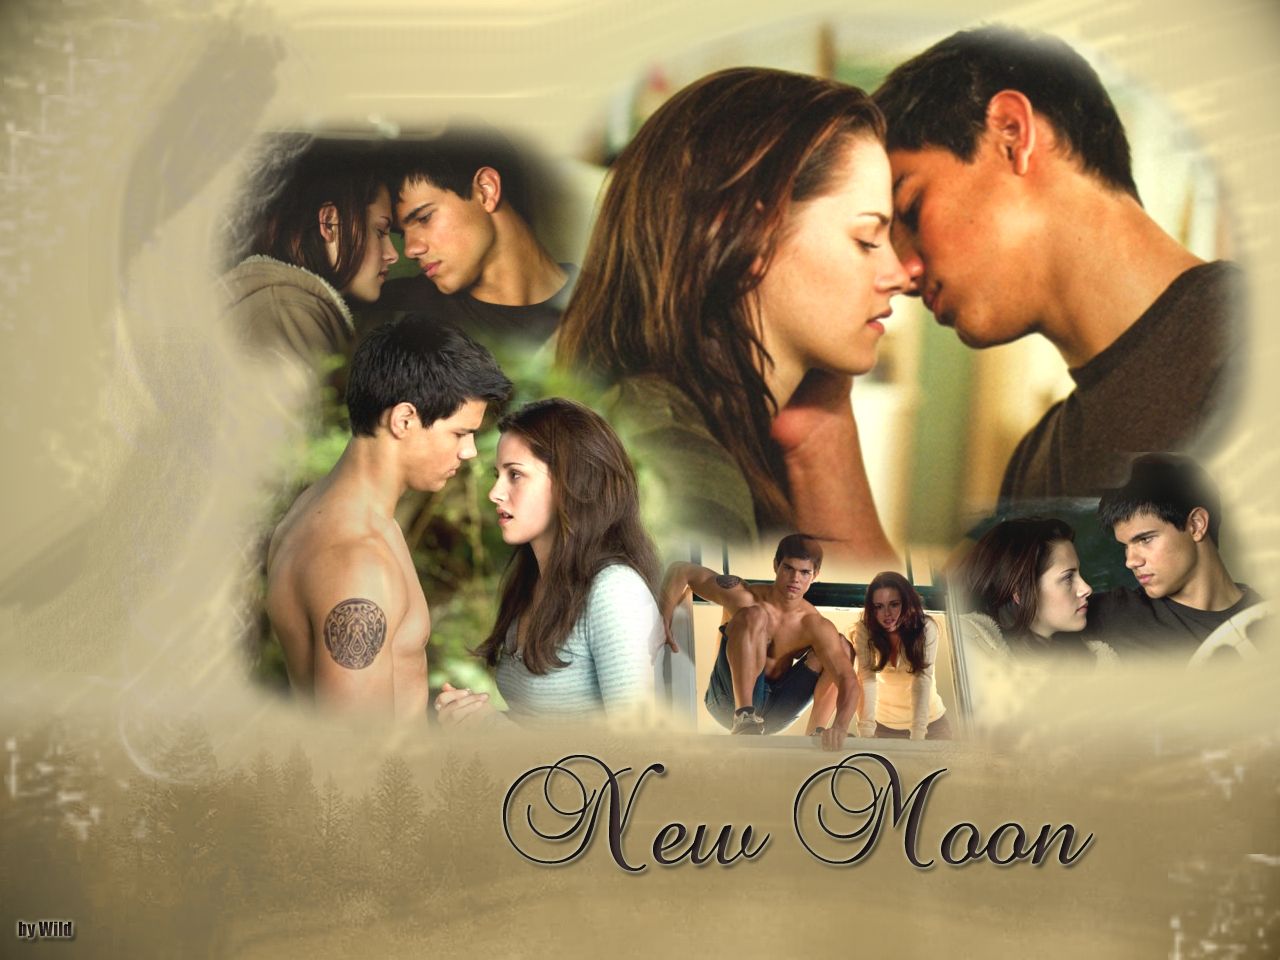 New Moon - The Twilight Saga: New Moon (Movie) Wallpaper (8571567 ...